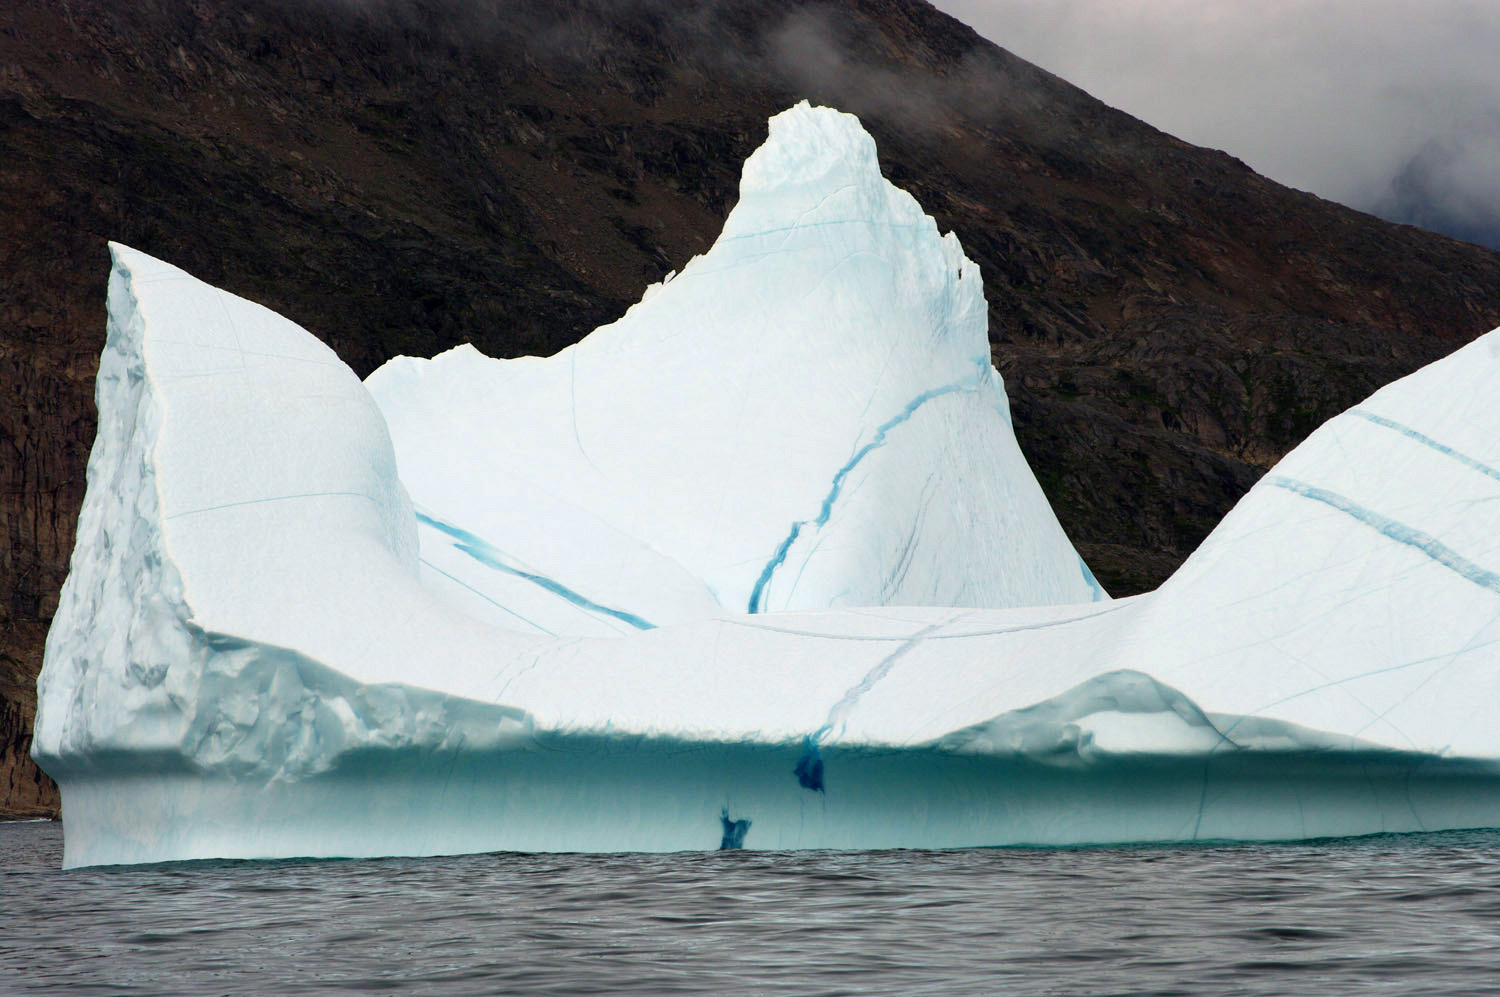 Iceberg 1 - East Greenland, greenland, travel